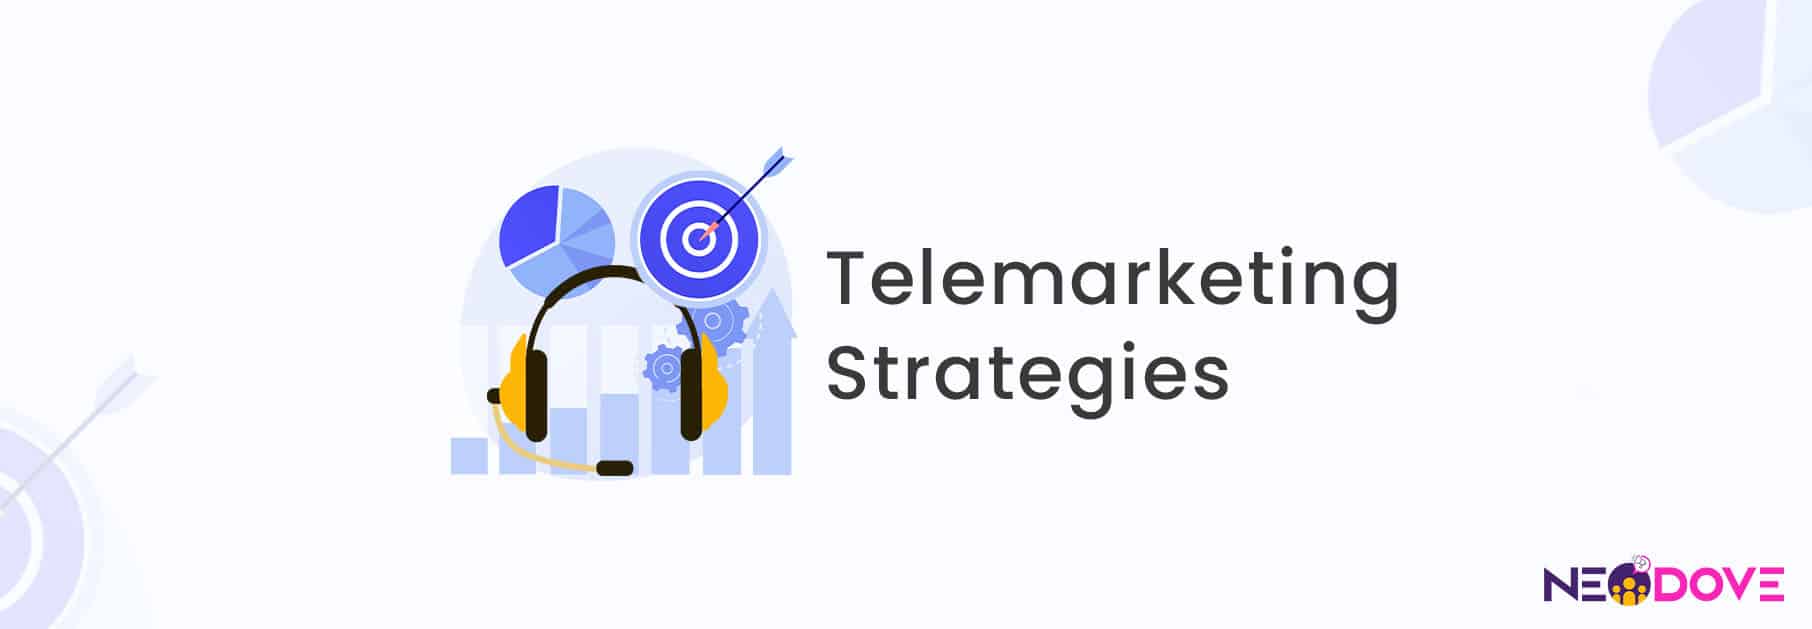 telemarketing strategies